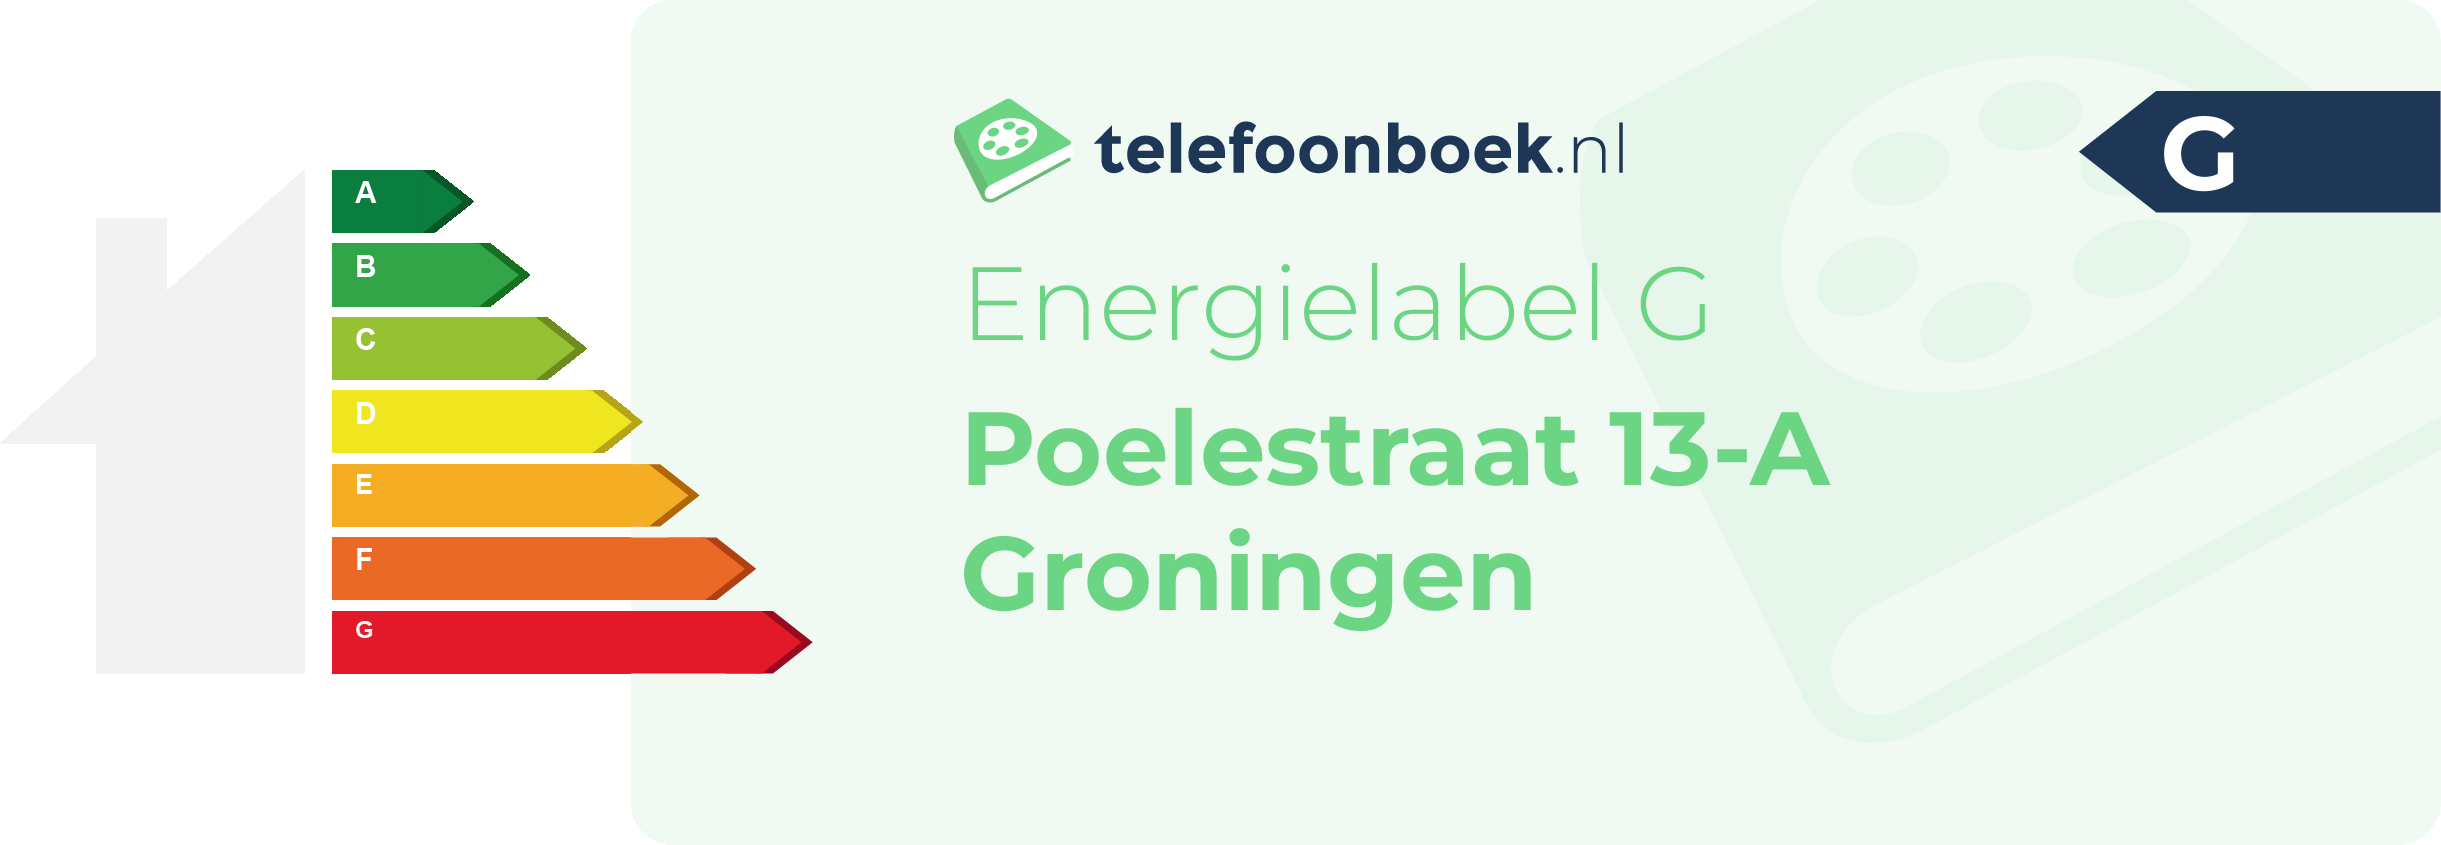 Energielabel Poelestraat 13-A Groningen